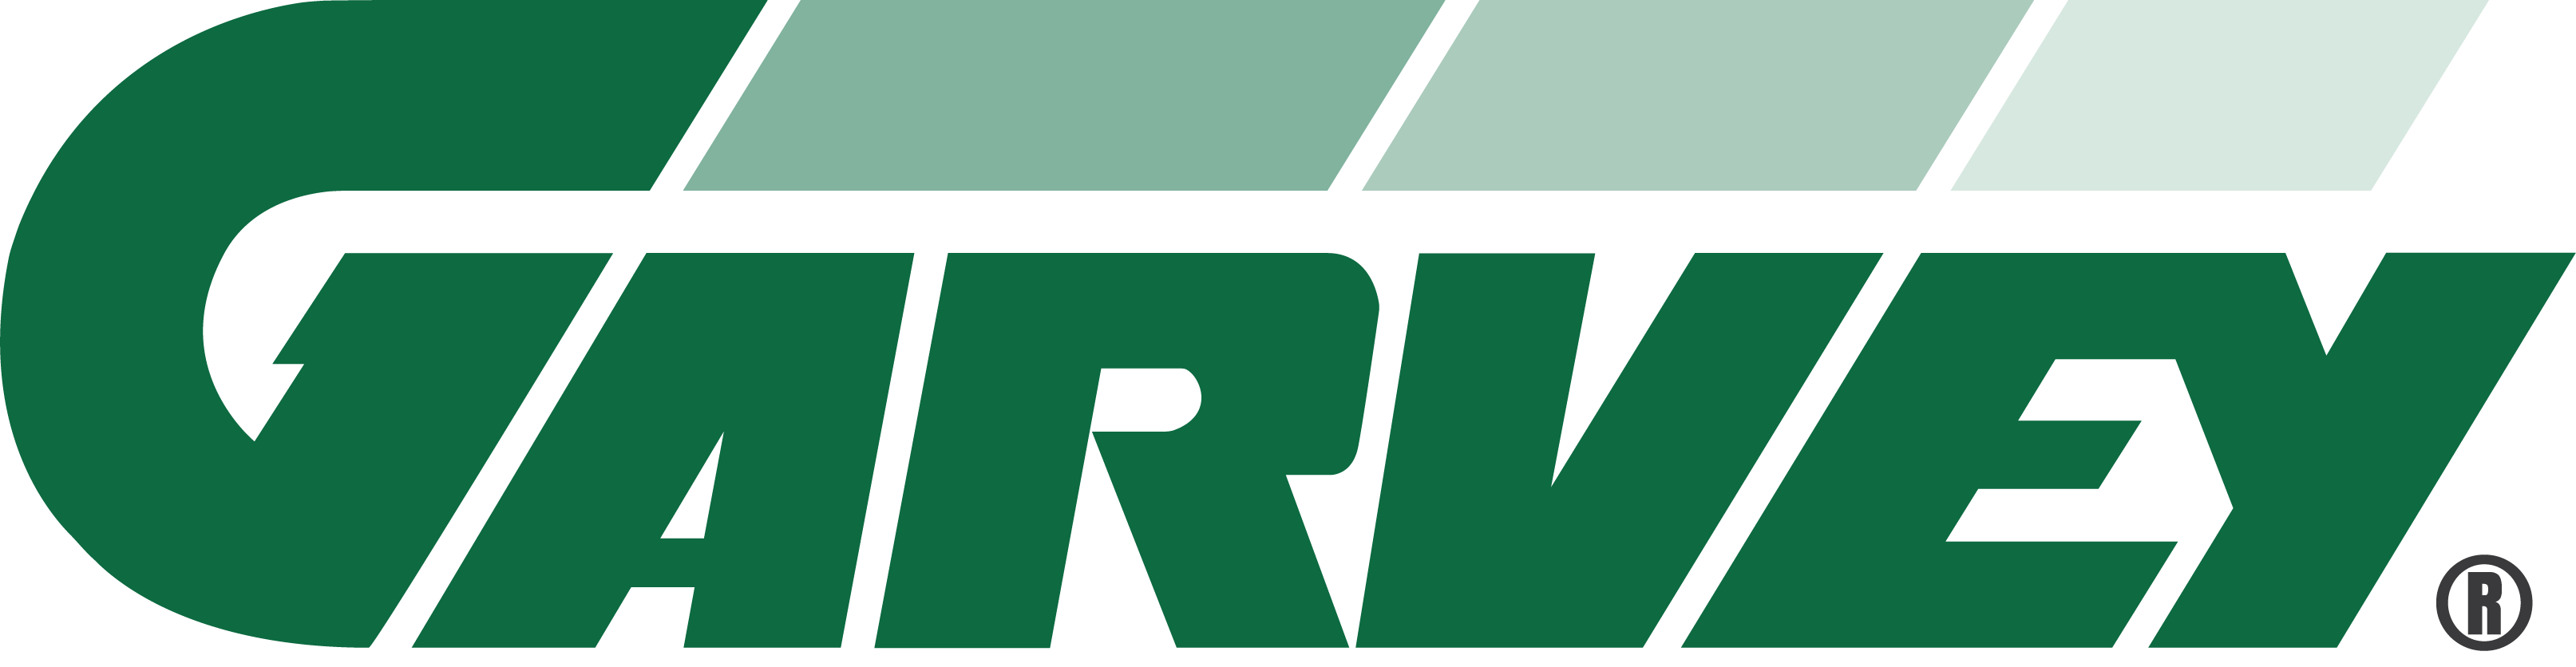 garvey logo green